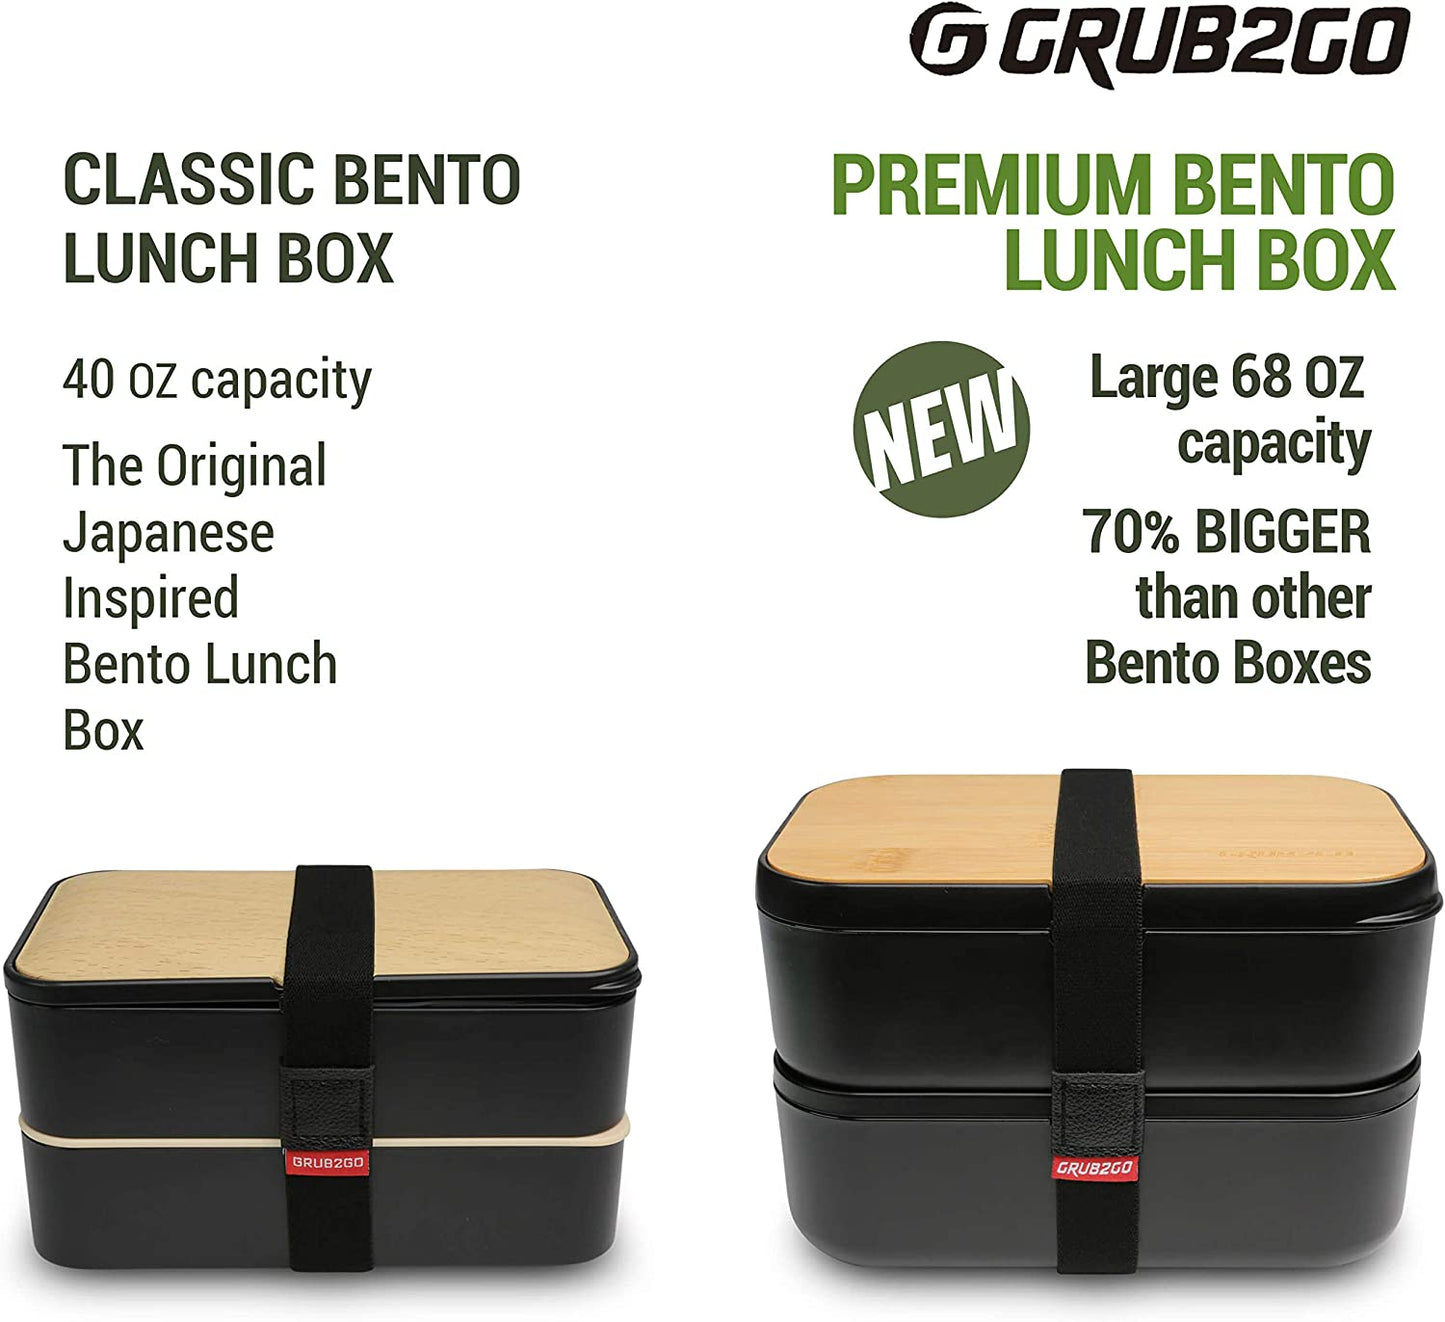 Premium Bento Lunch Bamboo Box 68oz Capacity